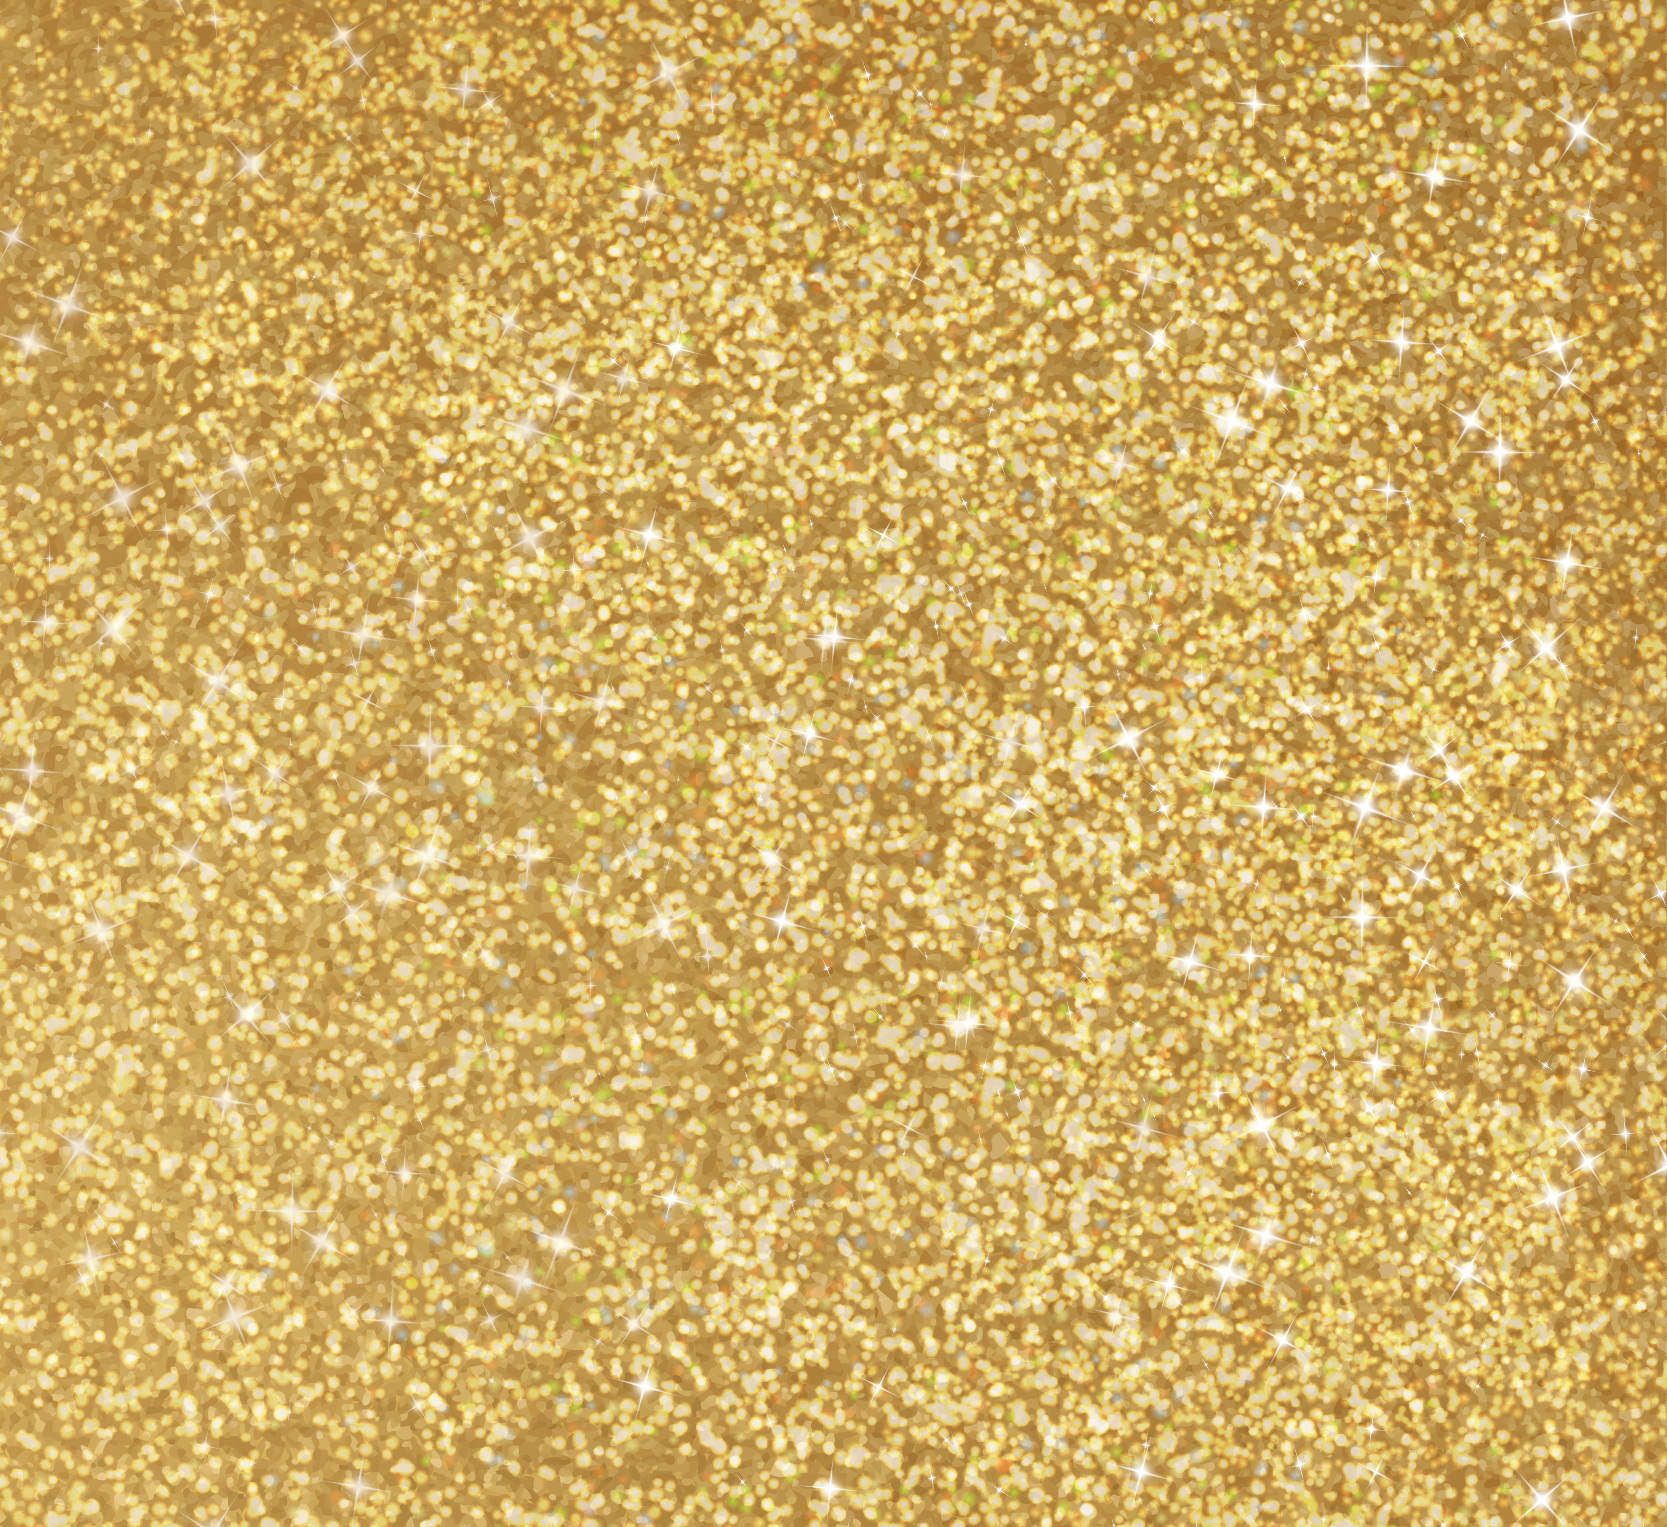 Vector Gold Glitter Backgrounds | Backgrounds | Pinterest | Gold ...